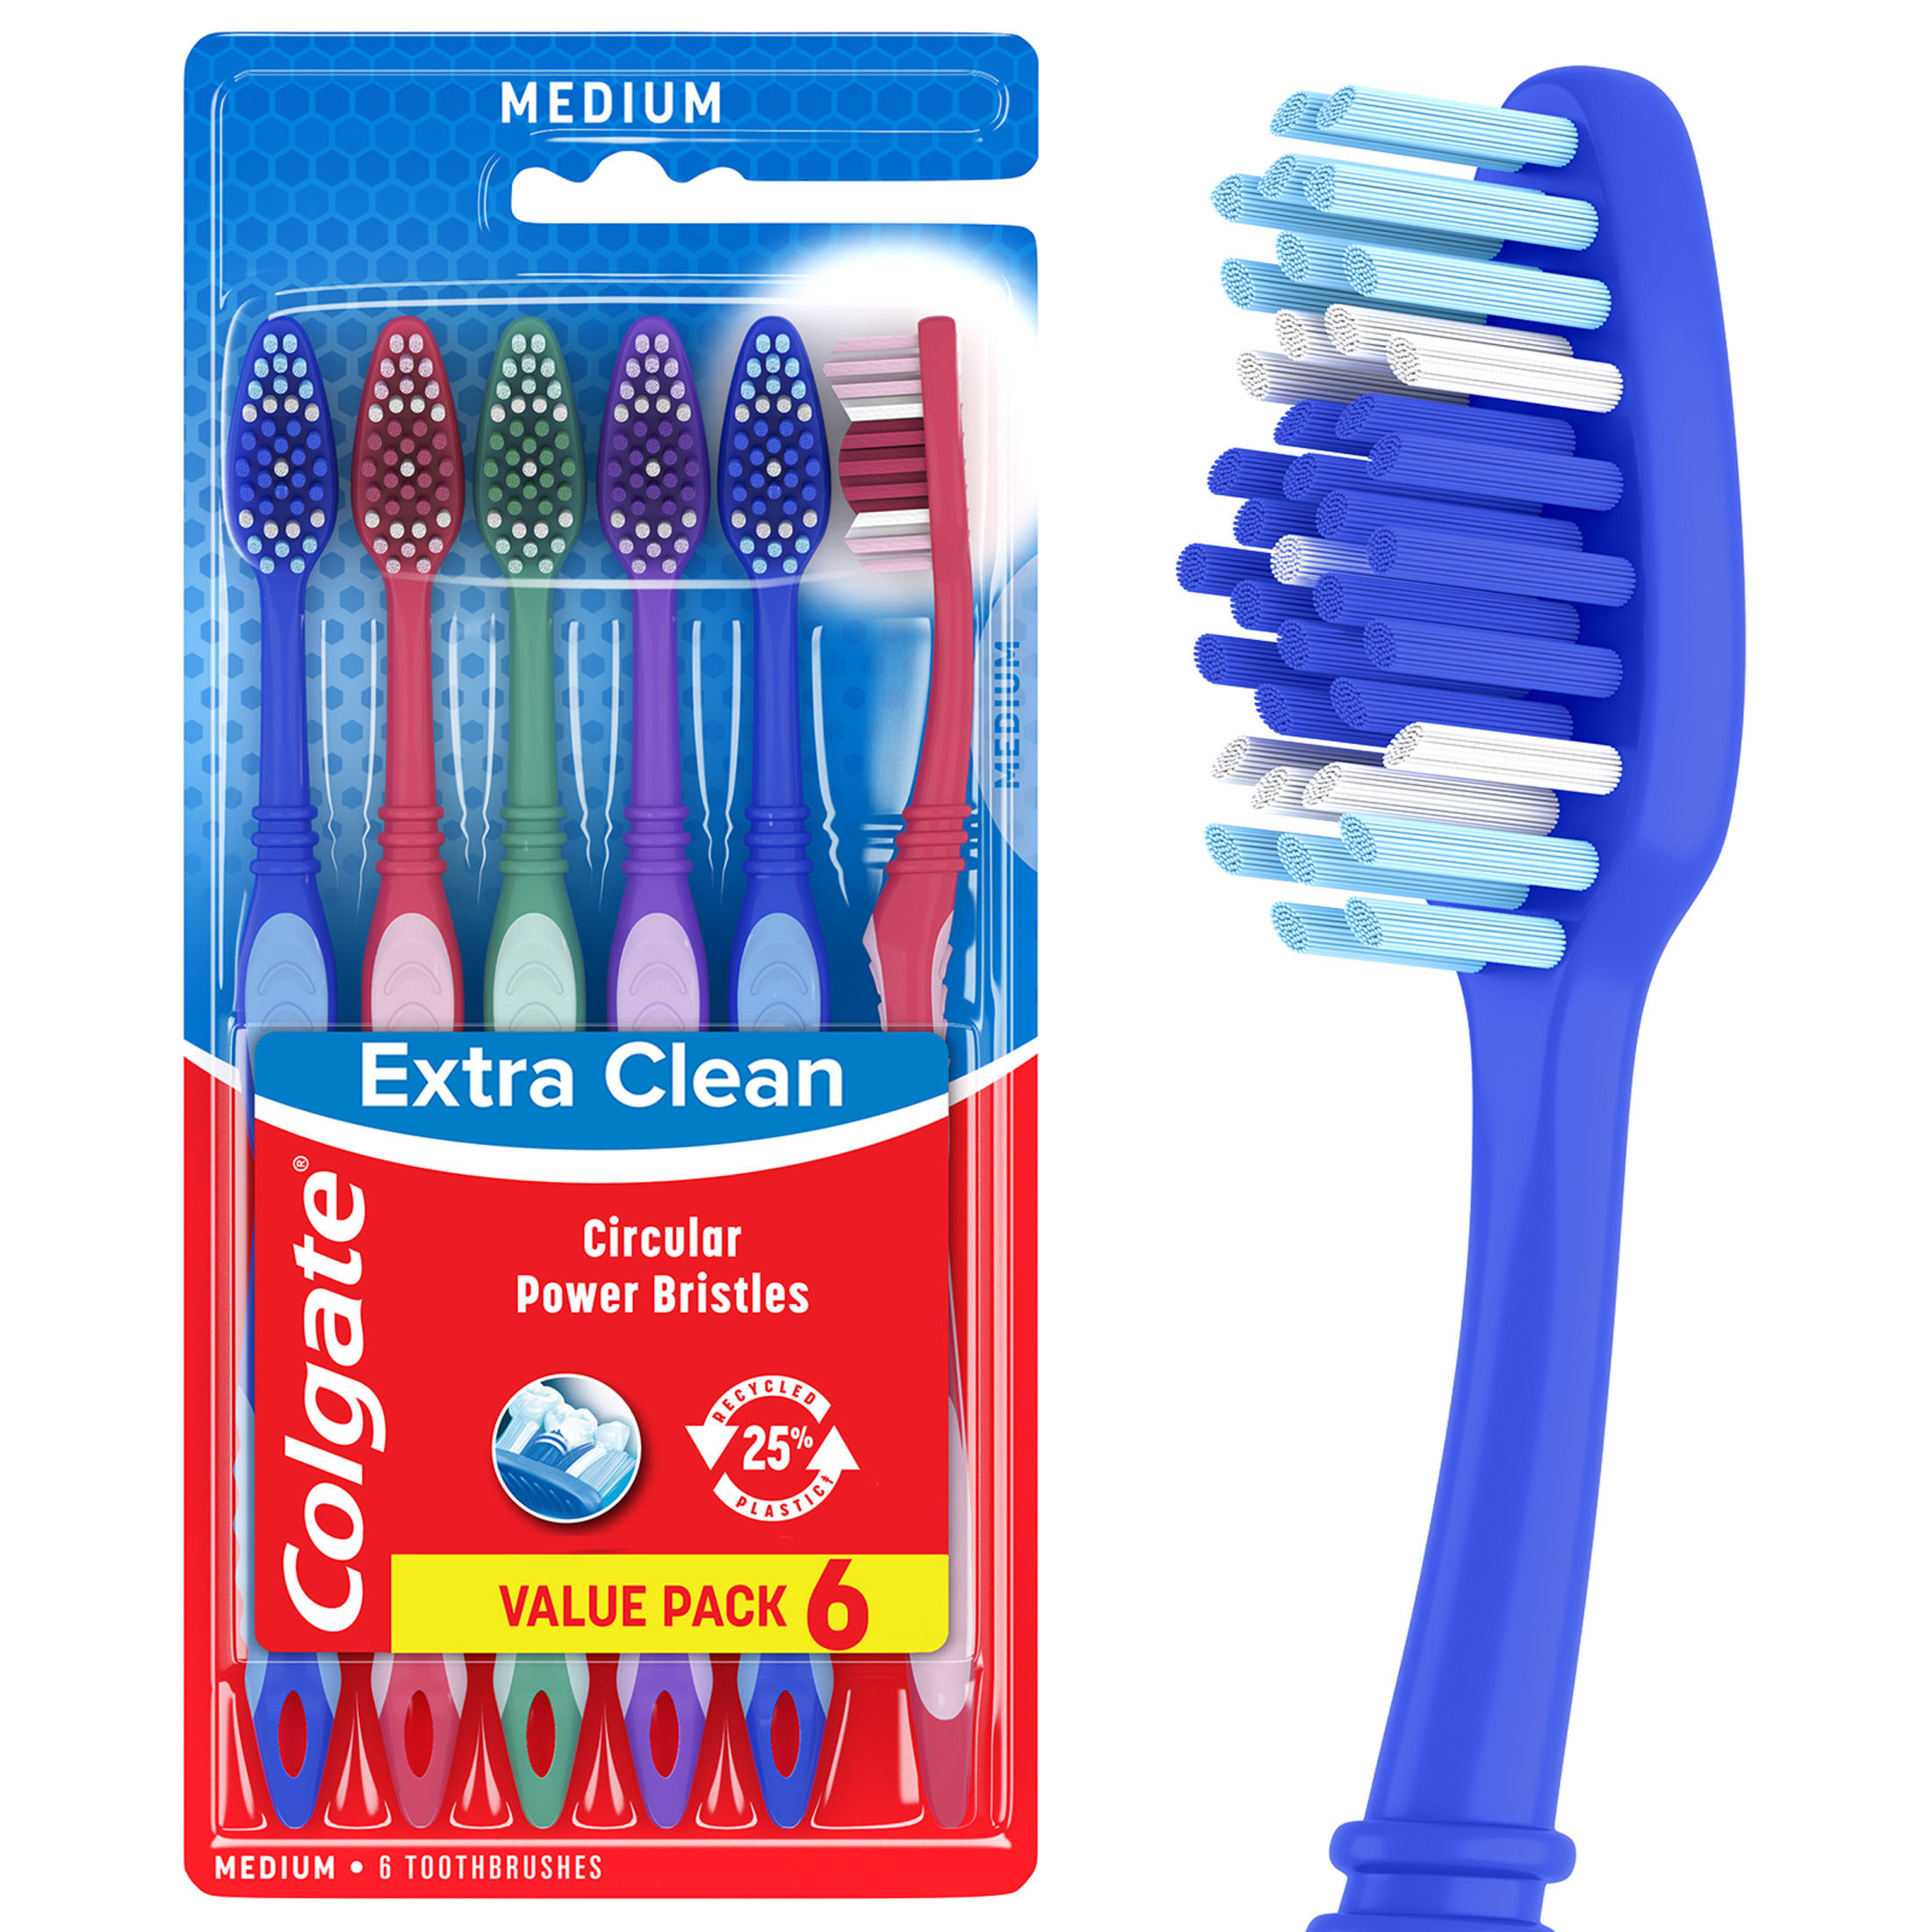 Colgate Extra Clean Toothbrush, Medium Bulk Toothbrush Pack, 6 Pack - image 1 of 10